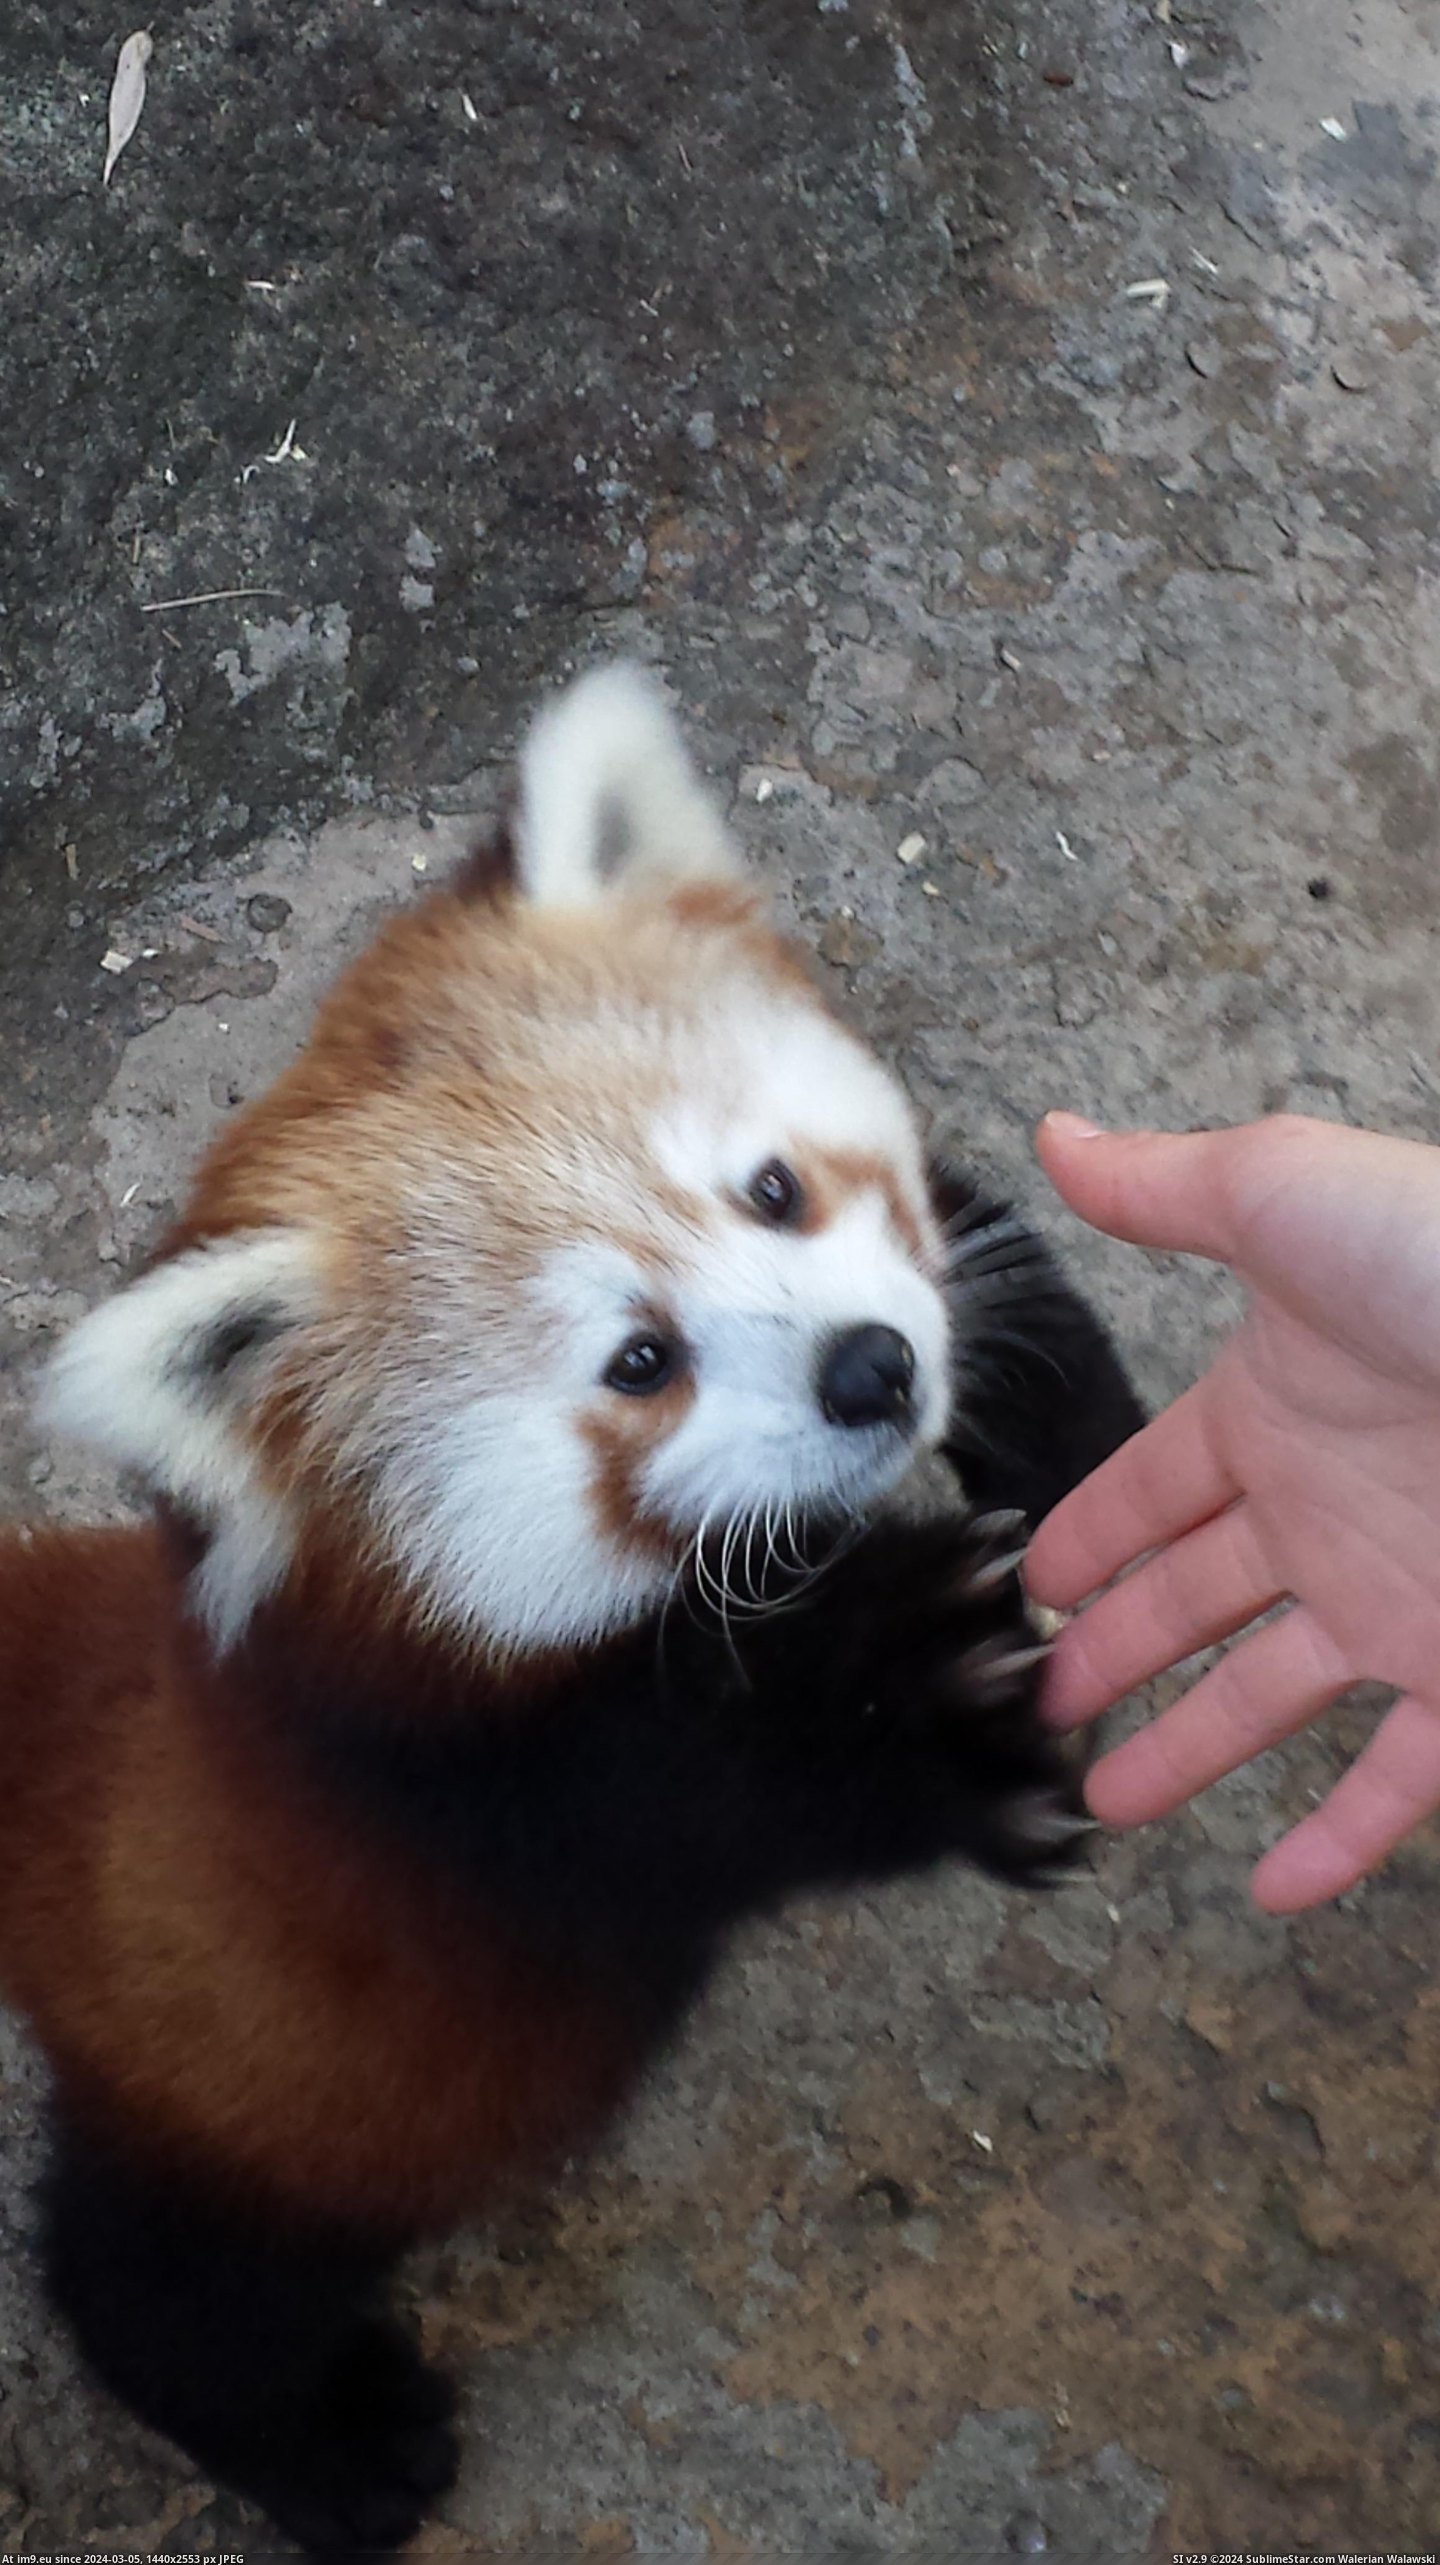 #Red #Girlfriend #Zoo #Shake #Panda #Got #Hands [Aww] My girlfriend got to shake hands with a red panda at the zoo! Pic. (Image of album My r/AWW favs))